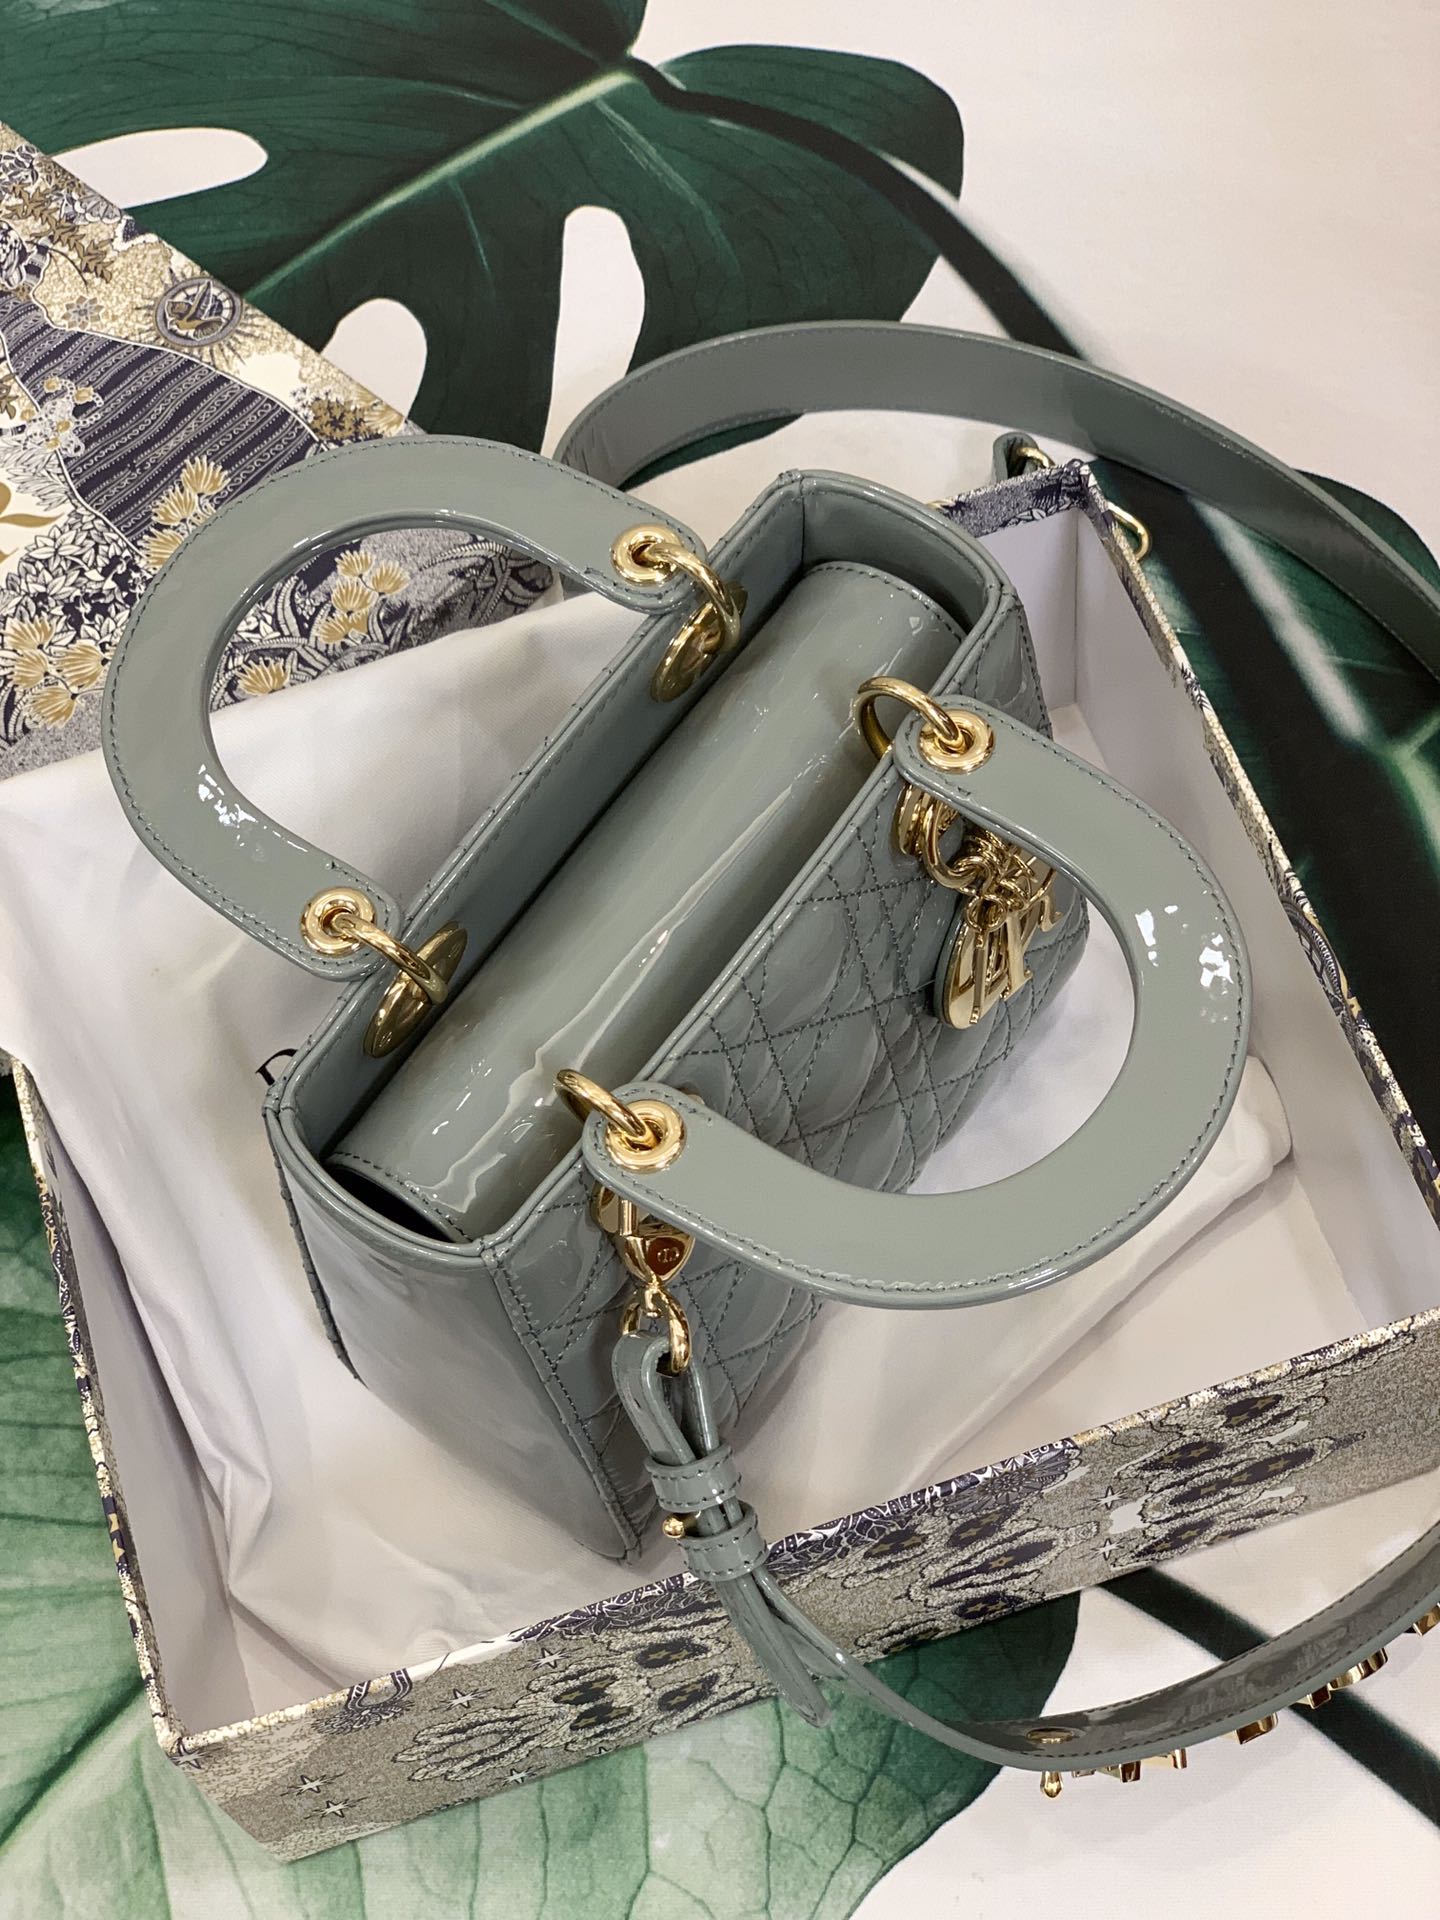 Pieni Lady Dior laukku